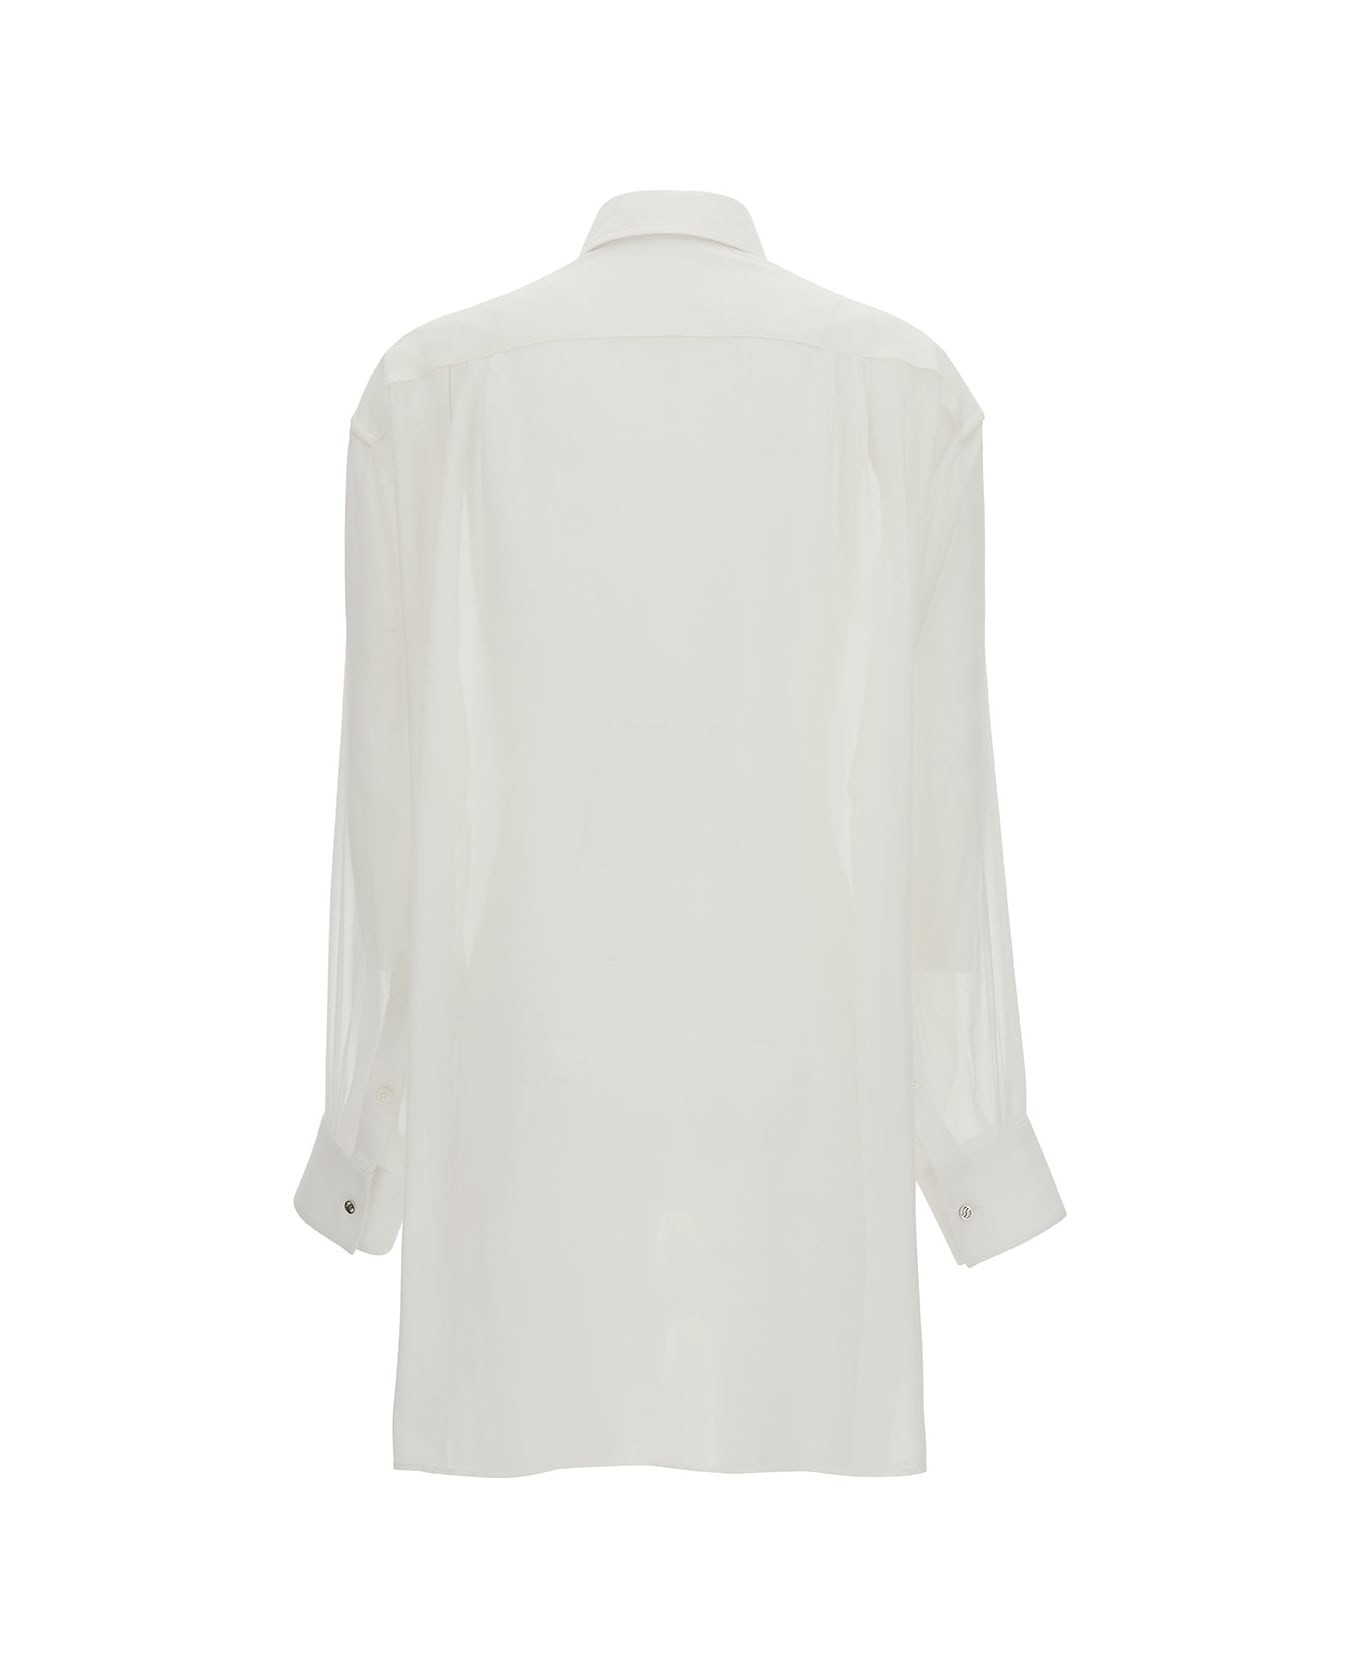 Stella McCartney Oversized White Tuxedo Shirt In Silk Woman - Bianco